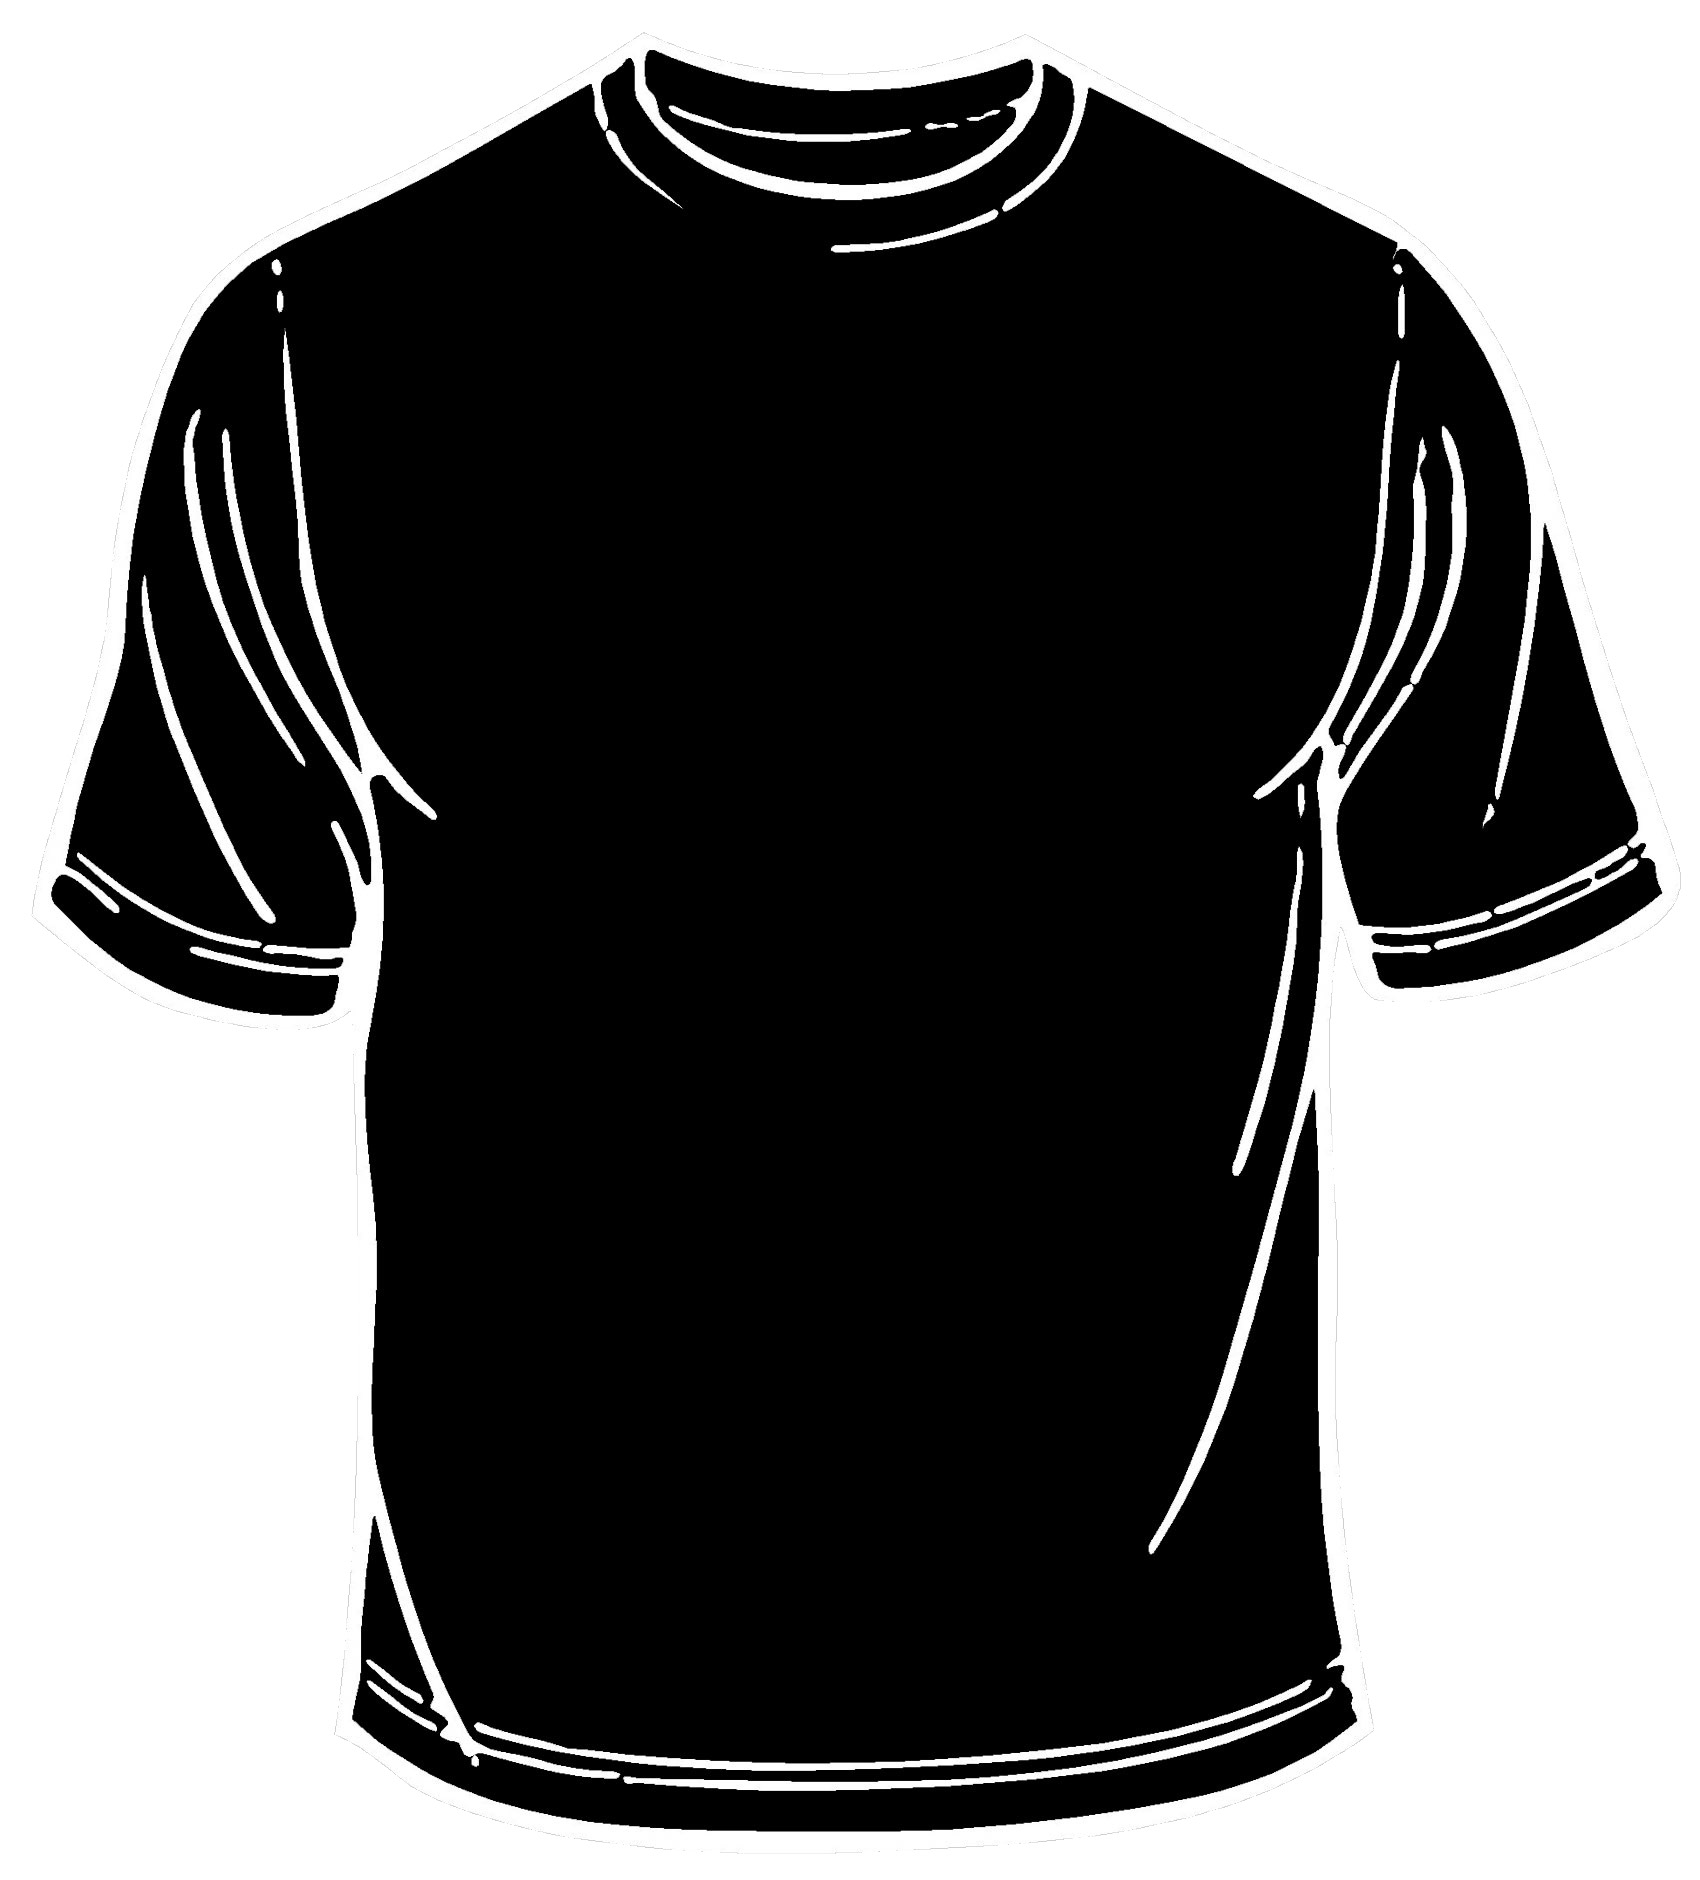 Images For > Black T Shirt Model Template - ClipArt Best - ClipArt Best